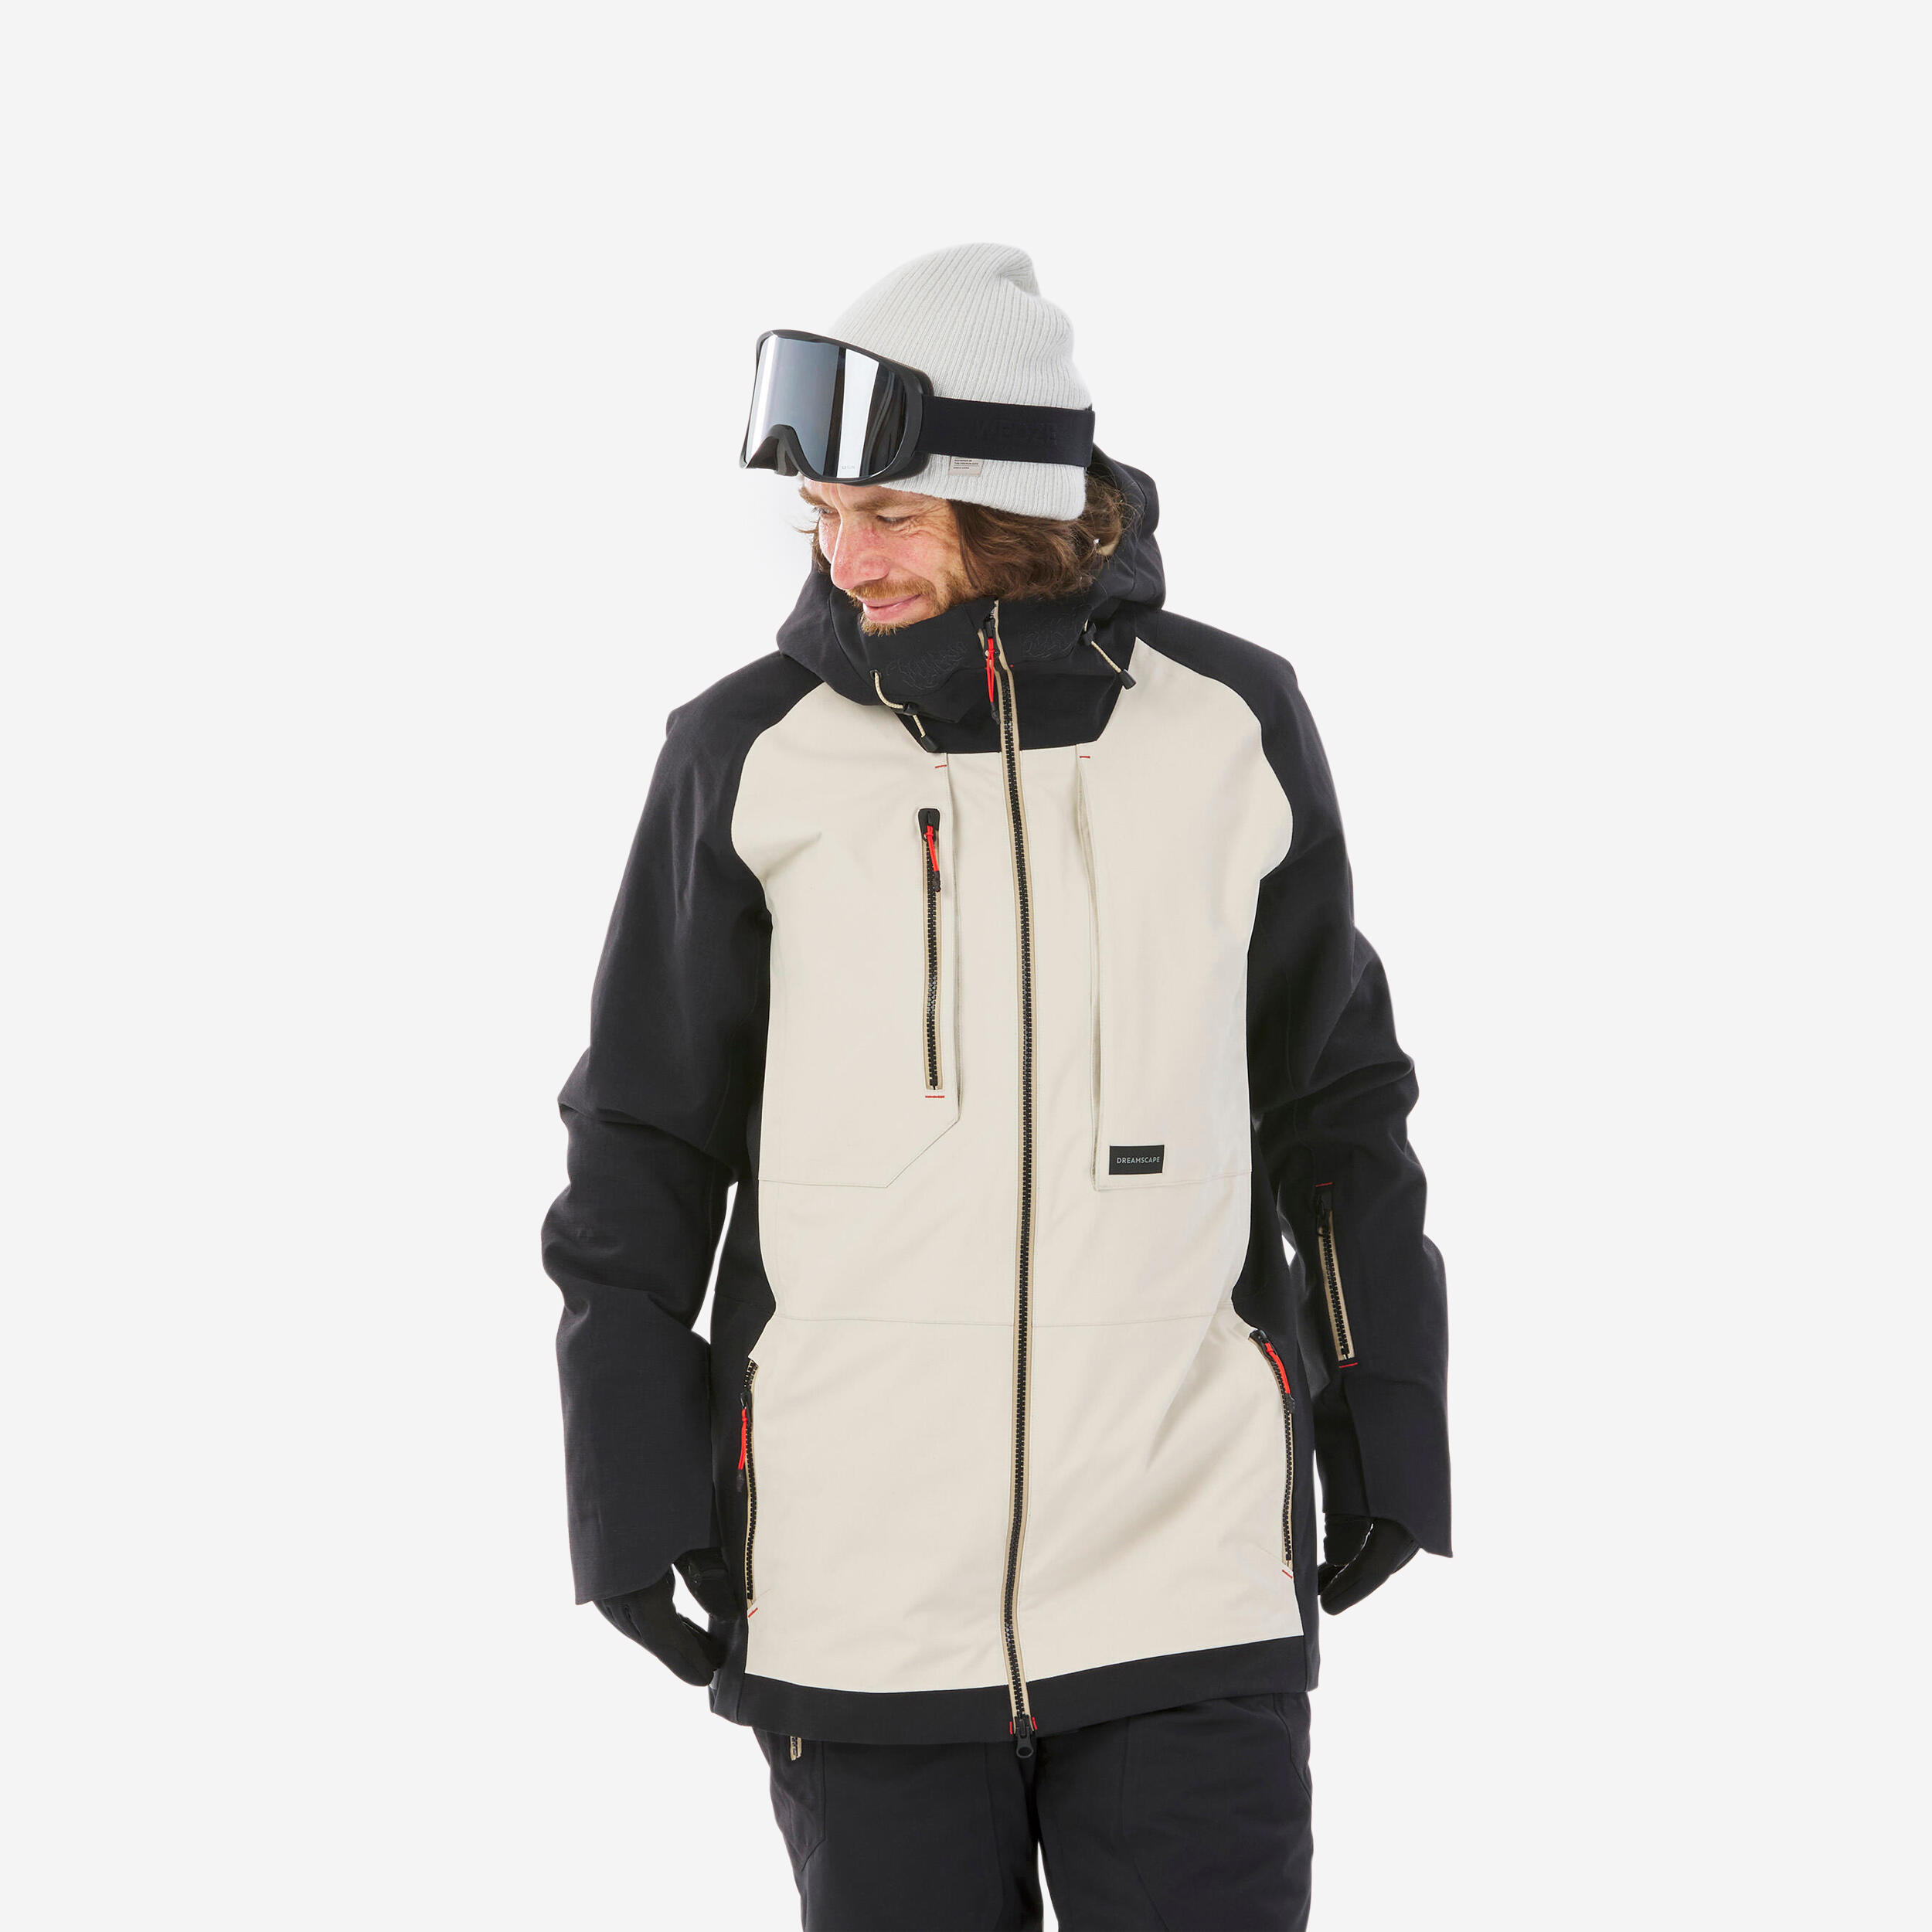 Men's Snowboard Jacket